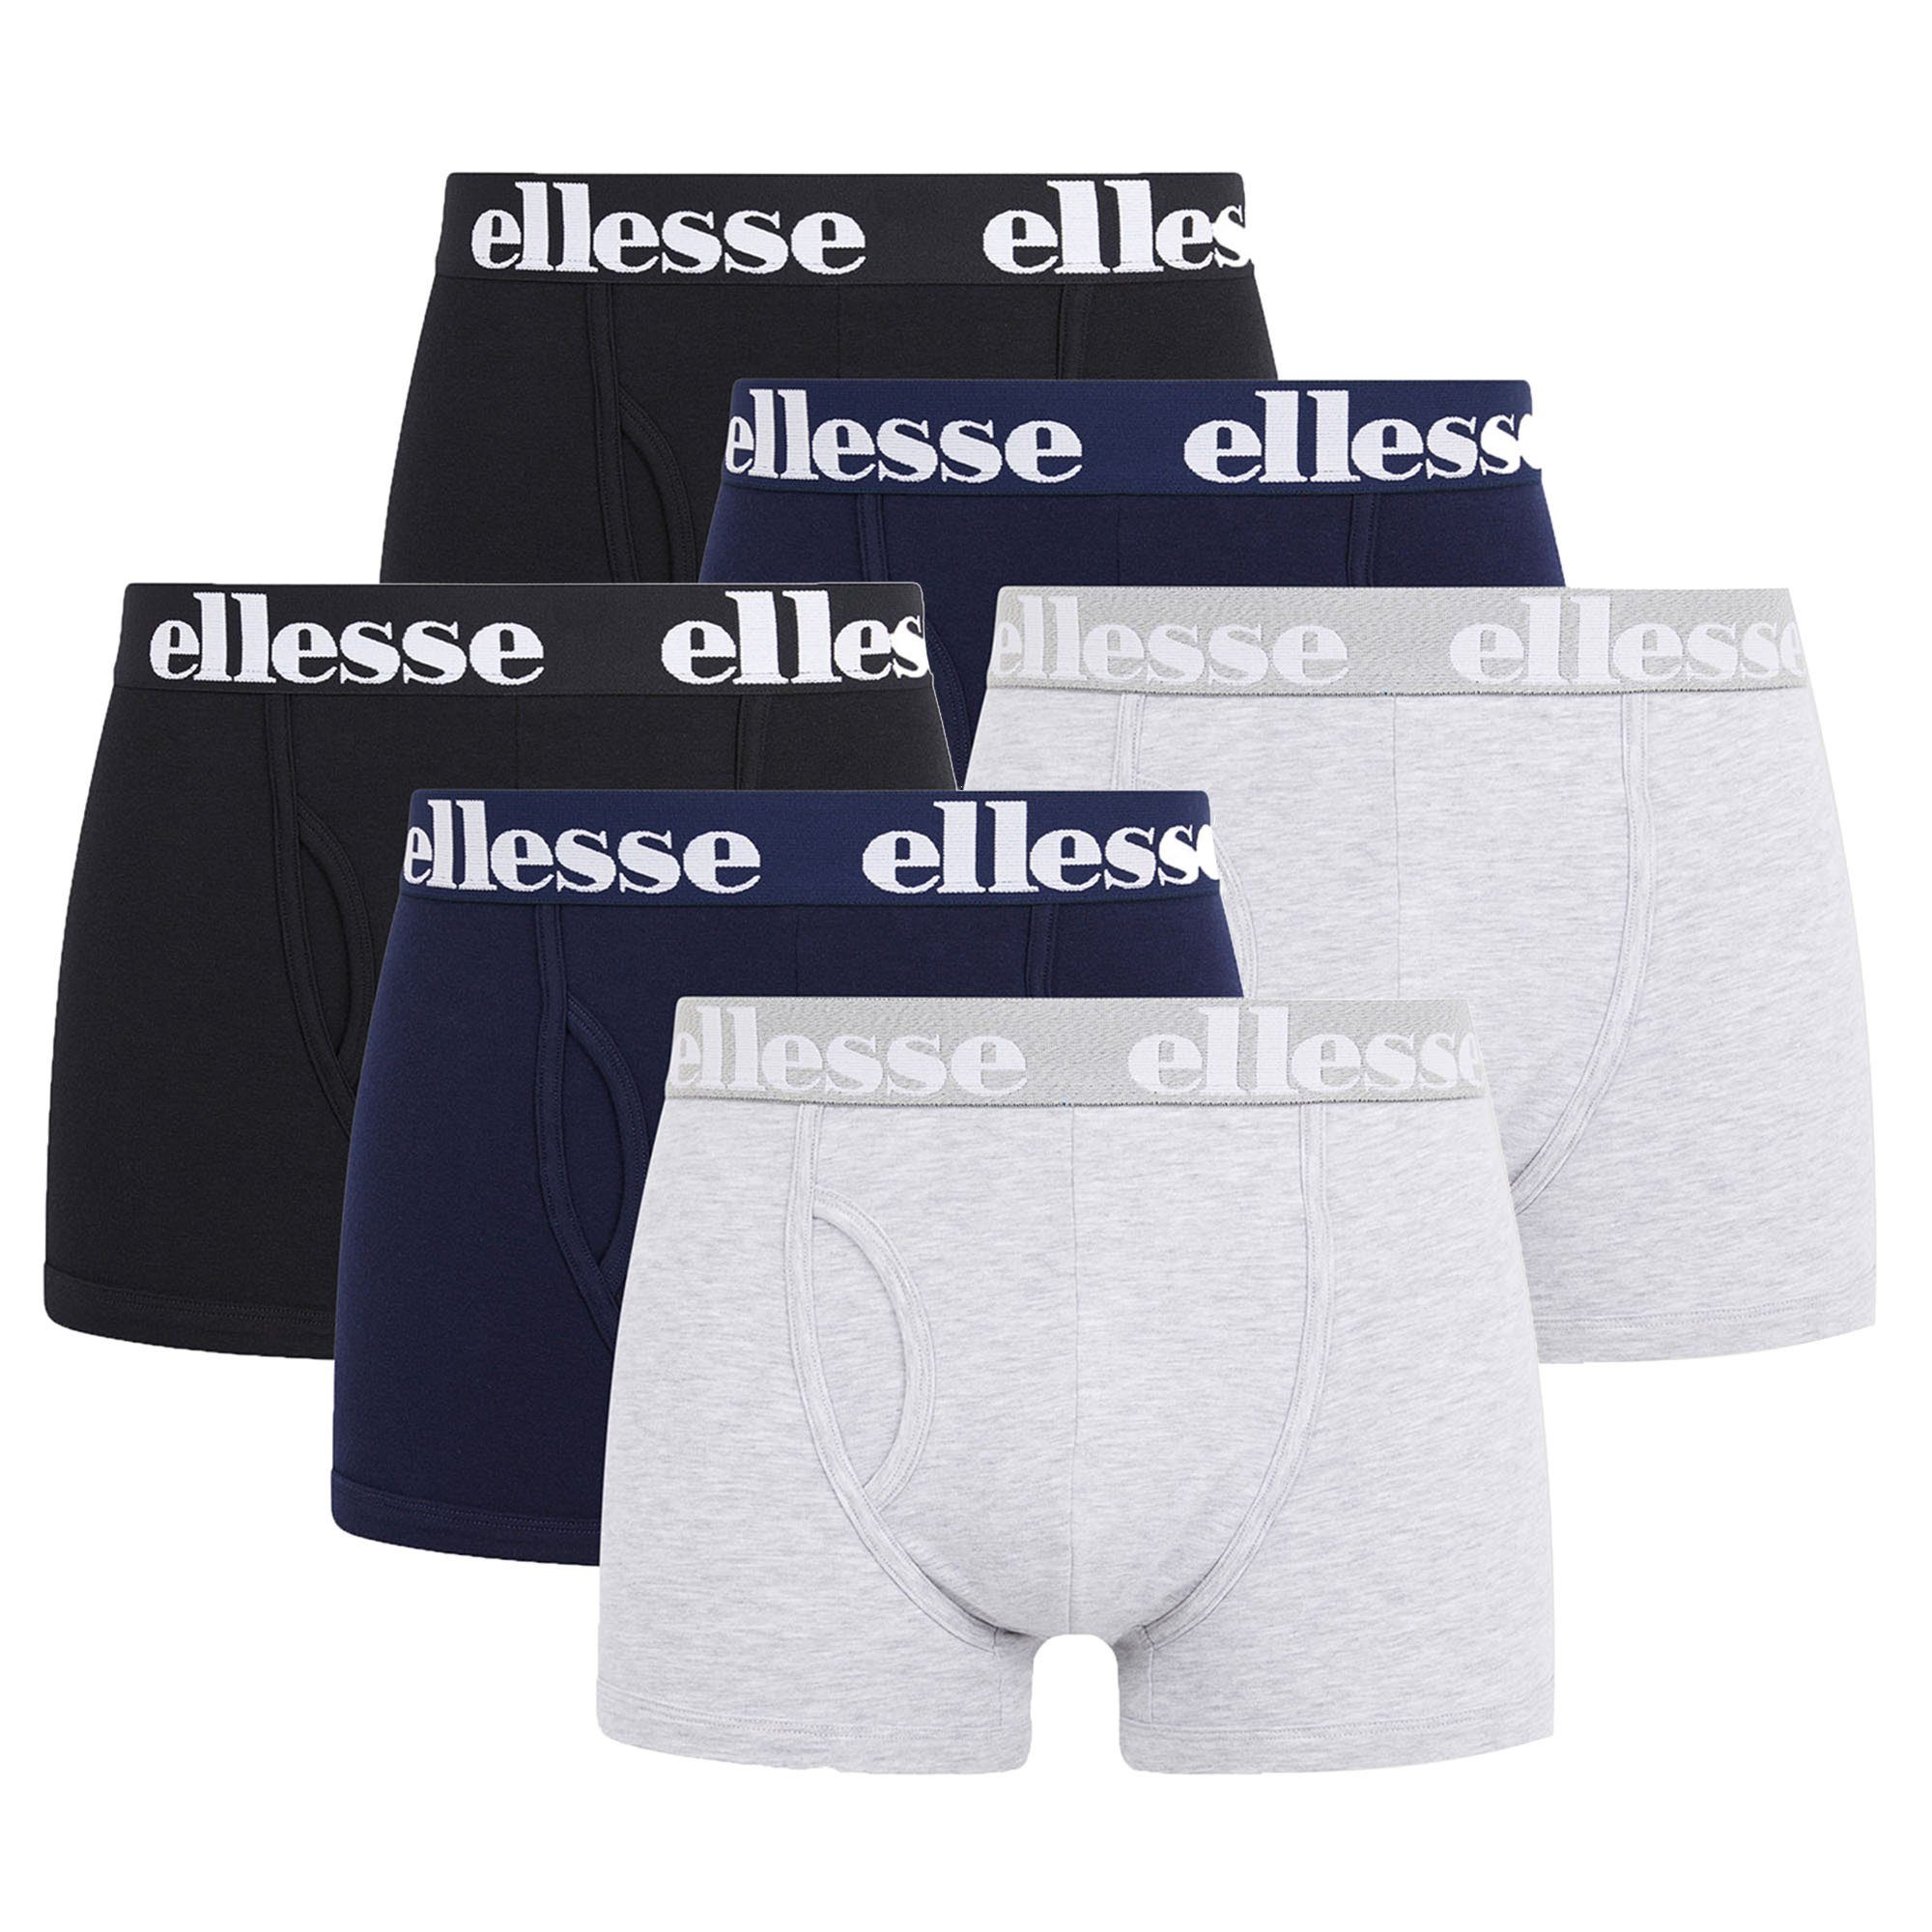 Ellesse Boxer Herren Boxer Shorts HALI, 6er Pack - Fashion Schwarz/Grau/Blau